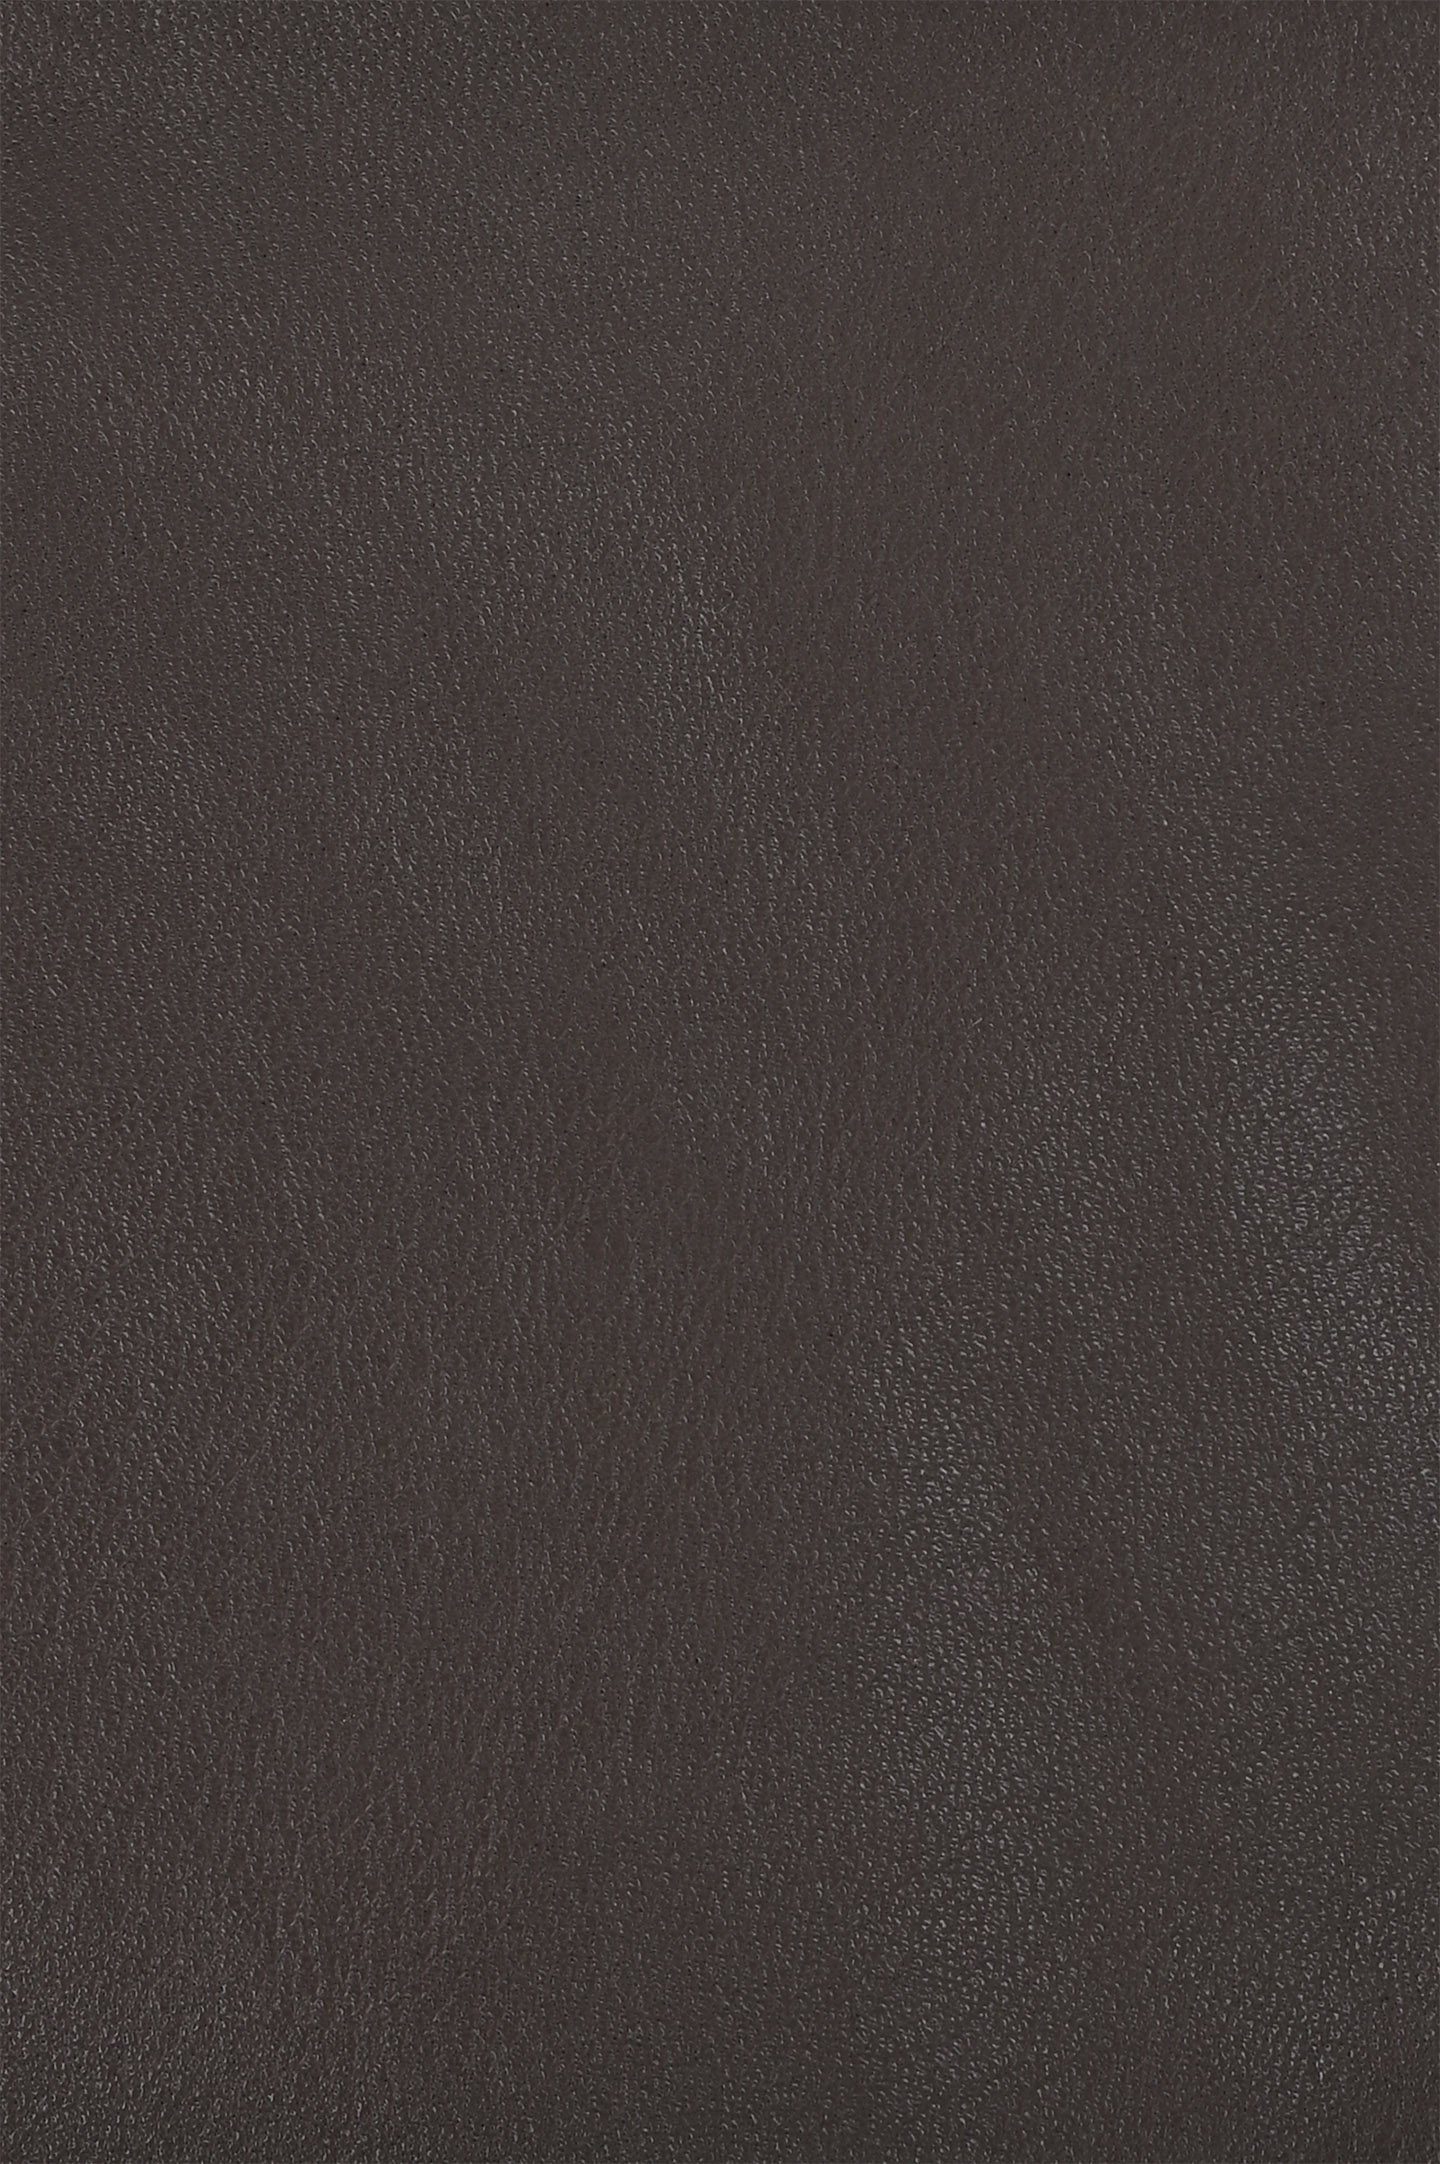 Сумка PESERICO S38304C0 09975, цвет: Темно-коричневый, Женский